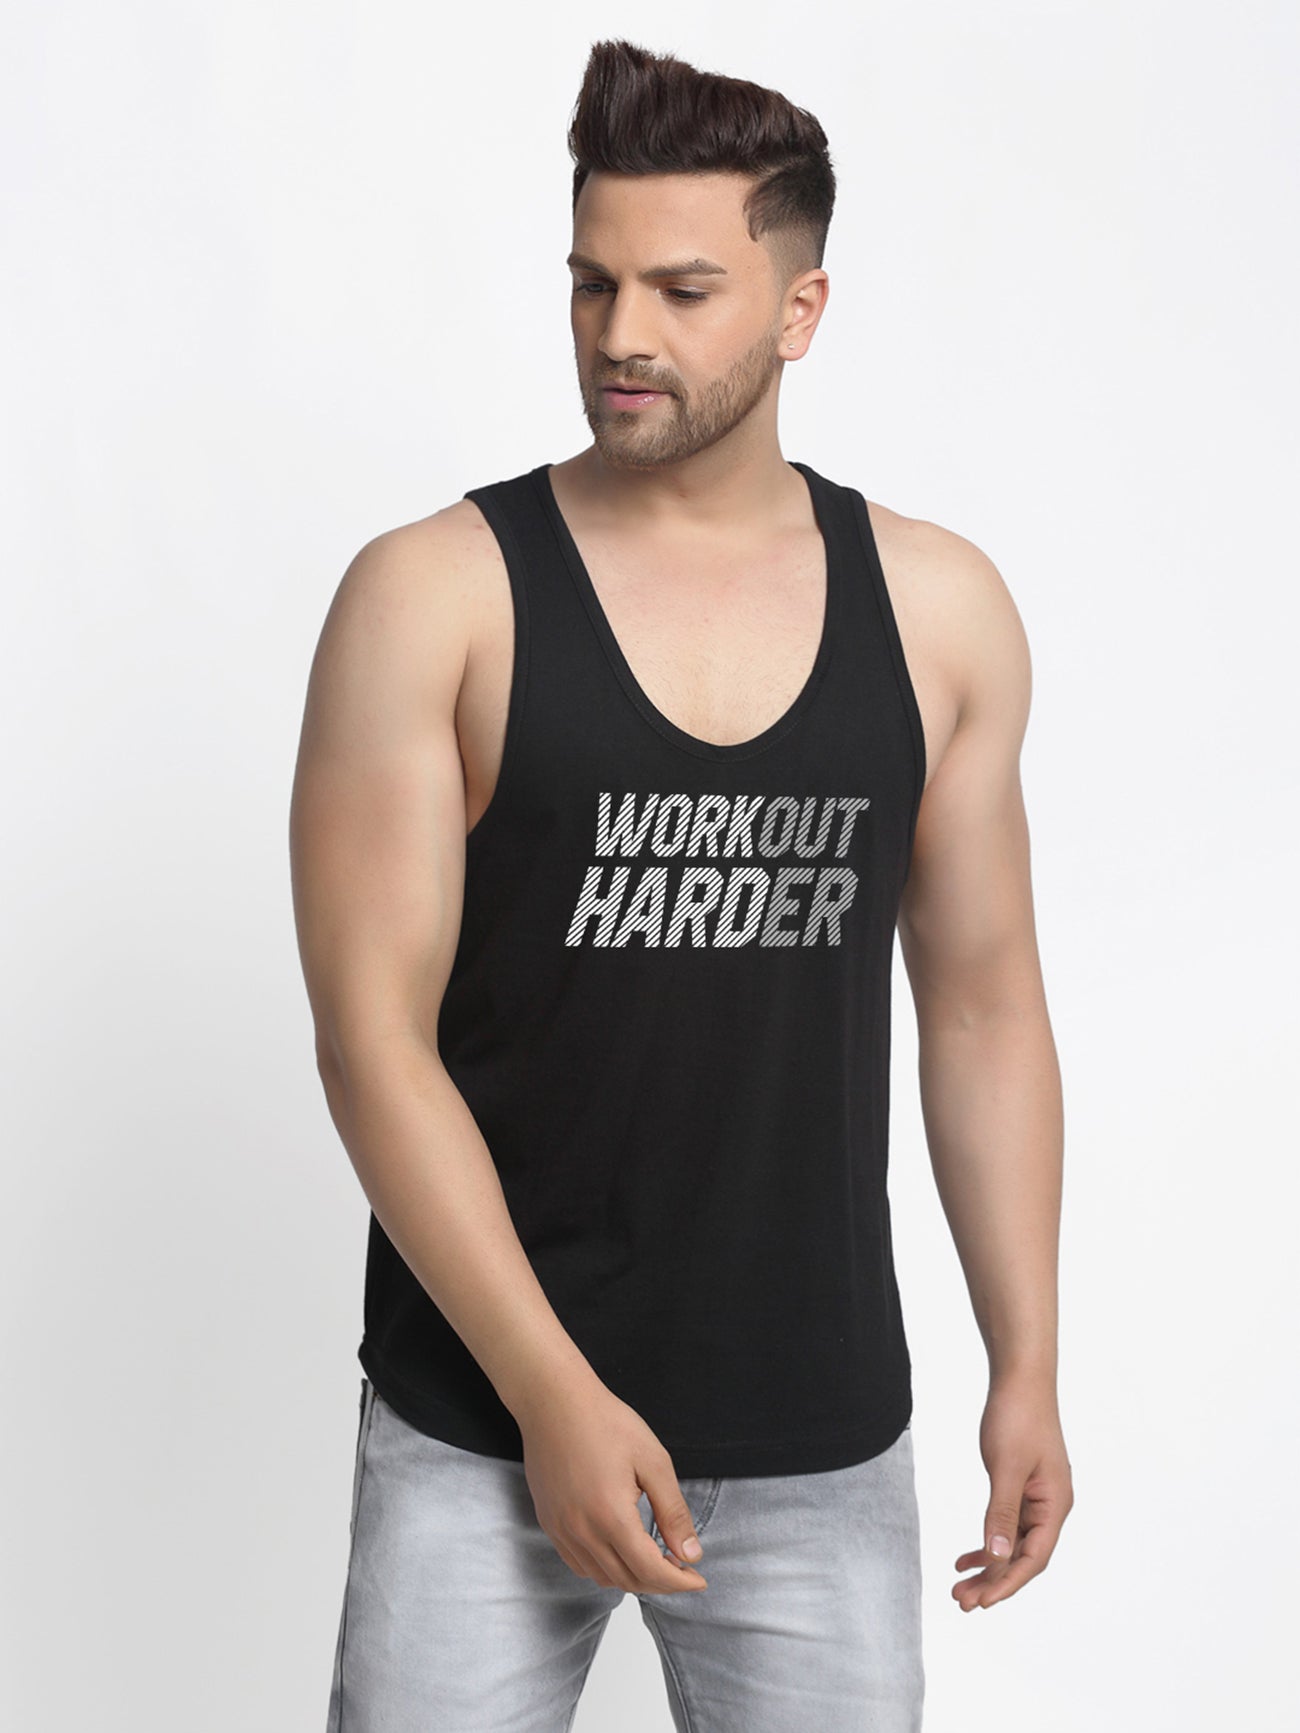 Workout Harder Printed Innerwear Gym Vest - Friskers